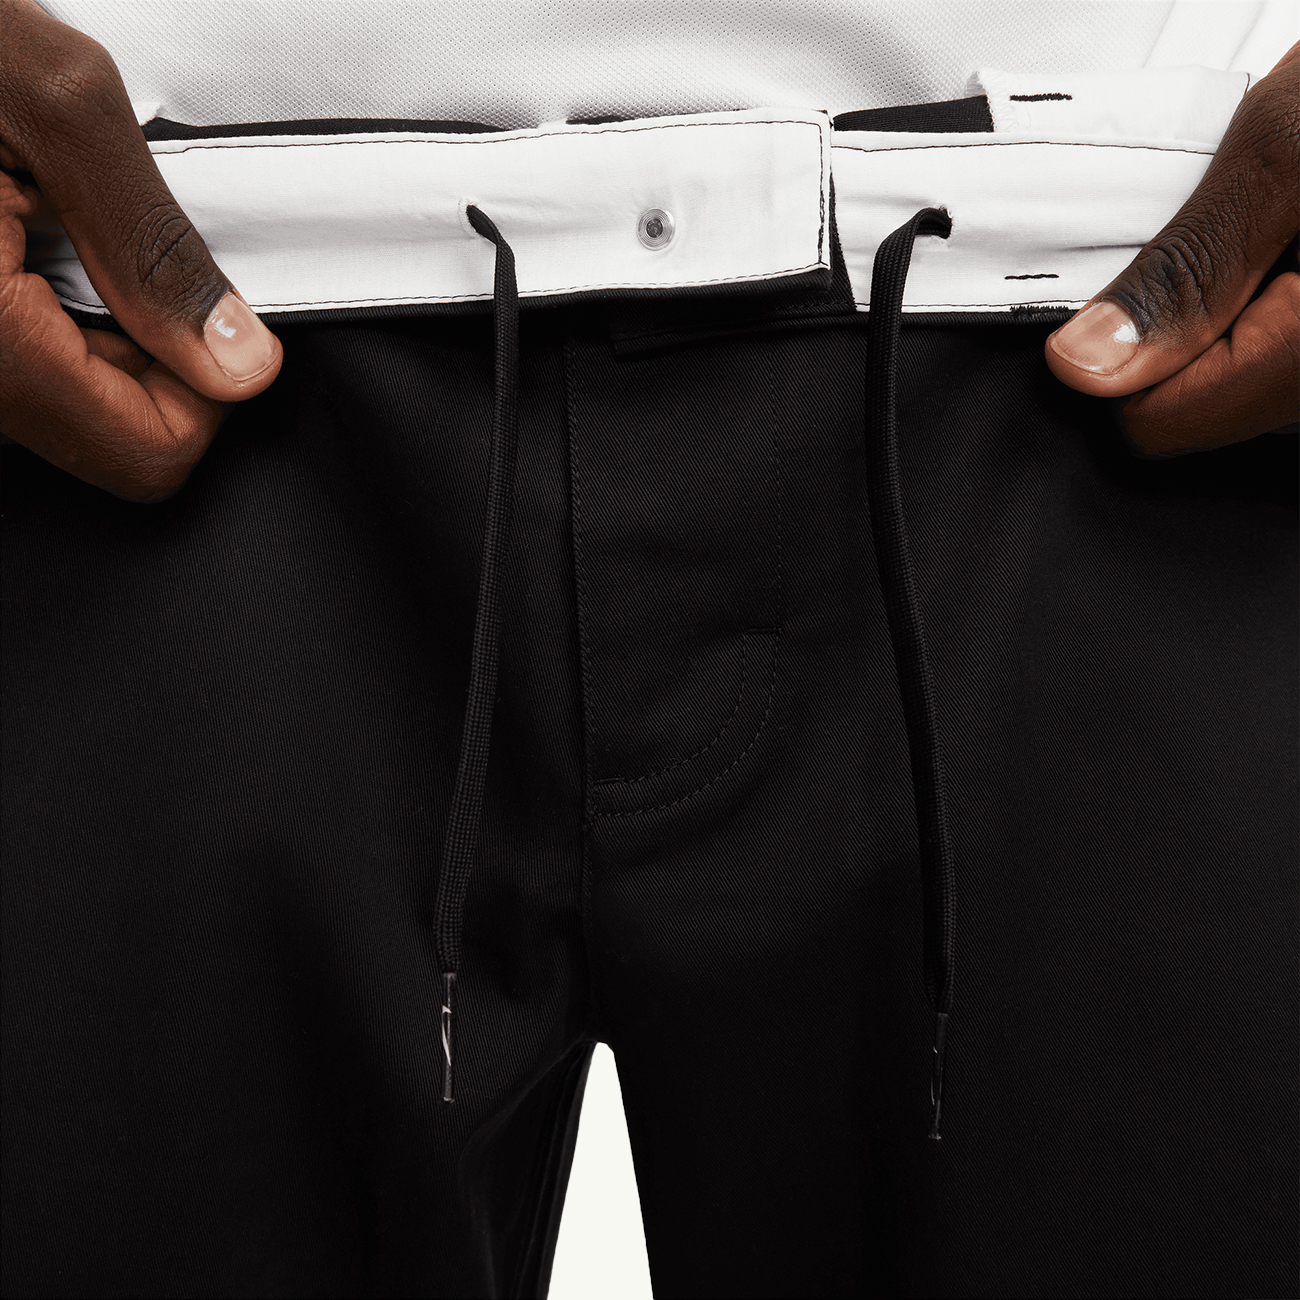 Nike Life Unlined Cotton Chino Pant - Black